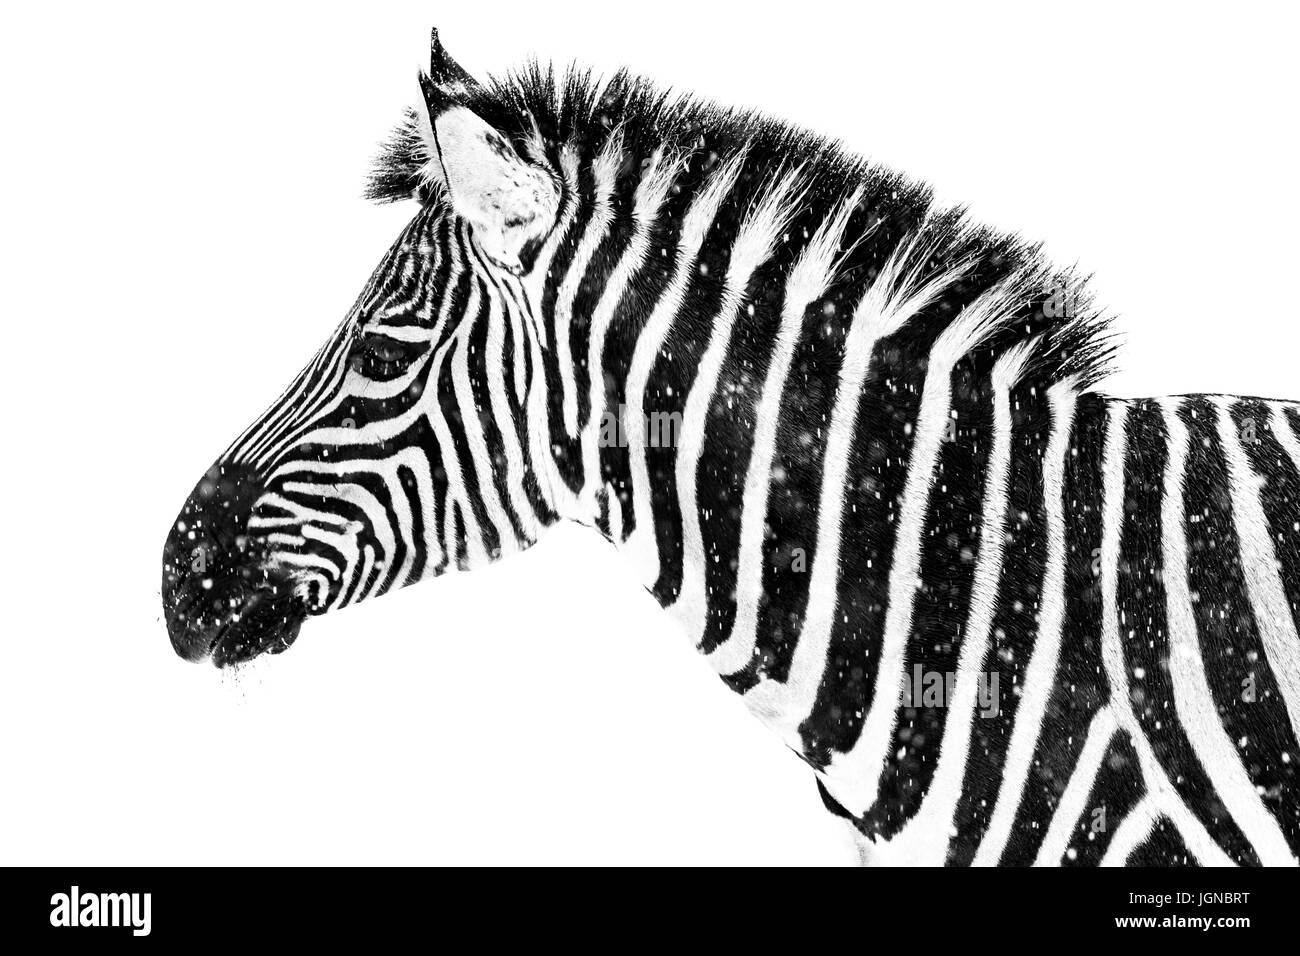 Profile Portrait of a Plains Zebra Against a White Background Stock Photo